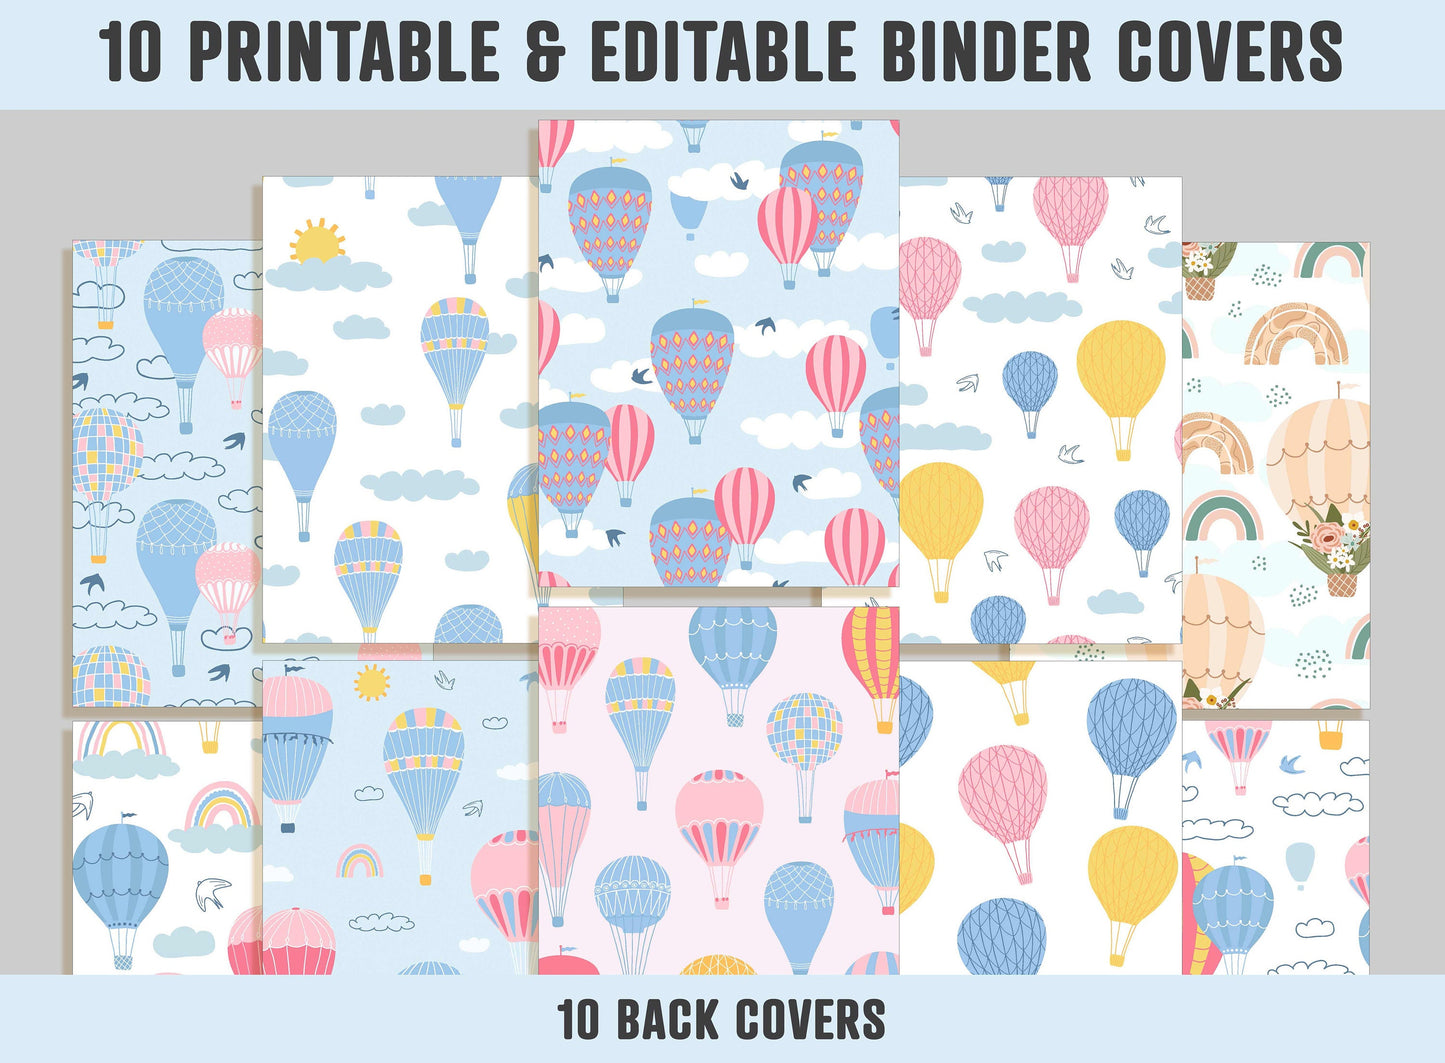 Printable Binder Cover, 10 Covers+Spines, Binder Cover Printable, Editable, Teacher/School Binder, Planner Cover, Binder Insert Template PDF